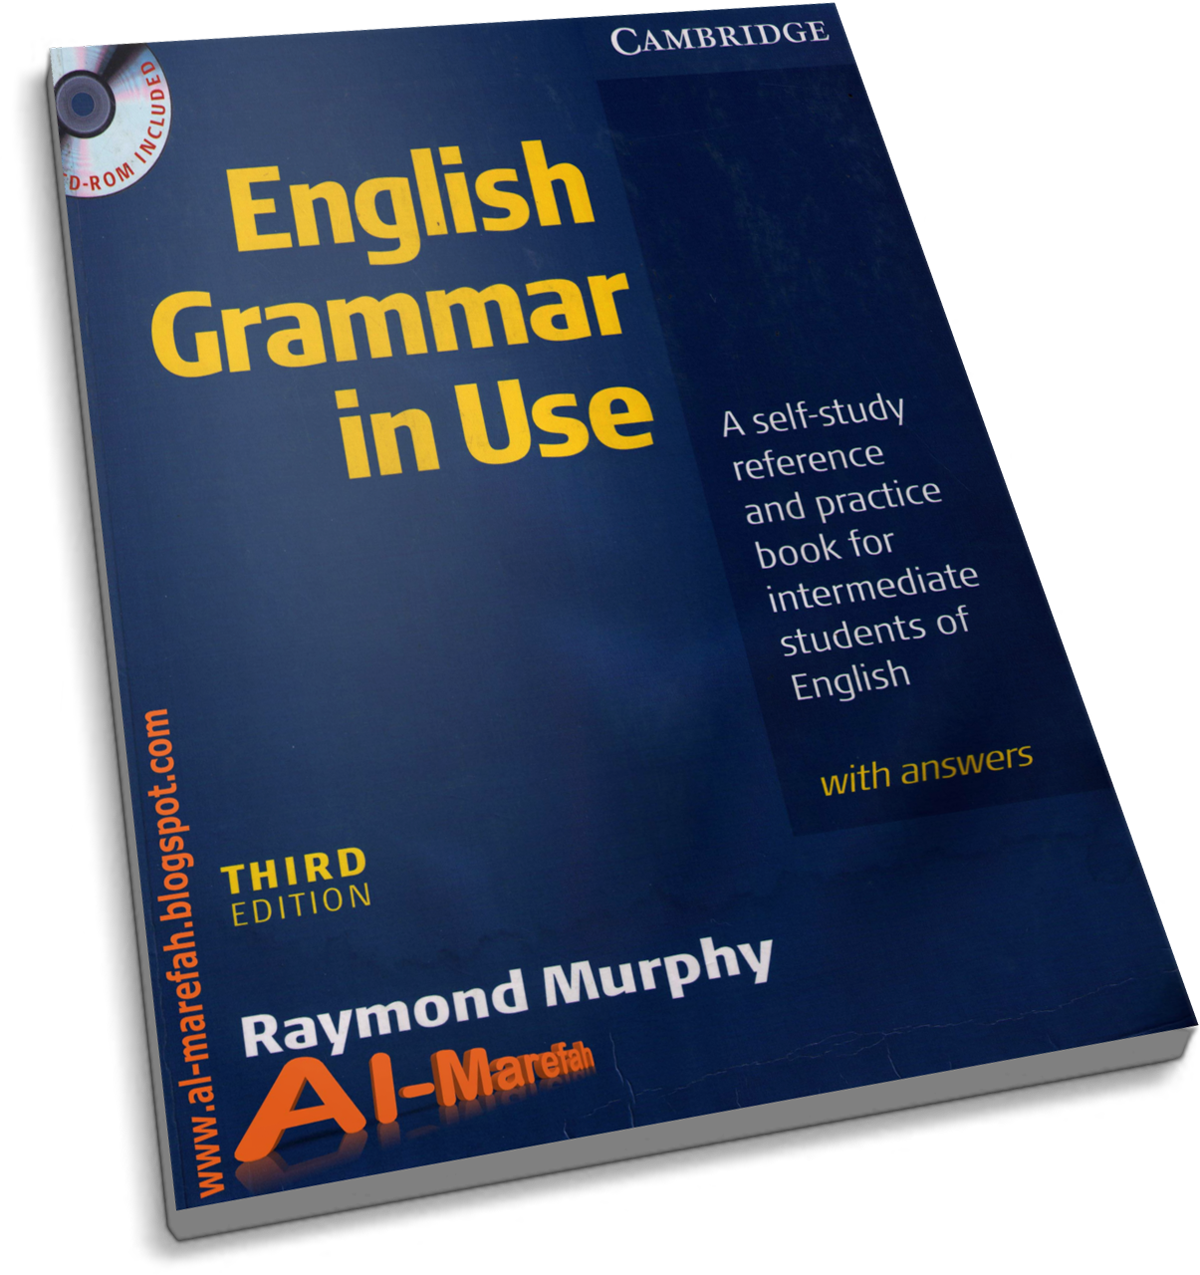 articles-a-an-english-grammar-worksheets-teaching-english-grammar-english-language-learning